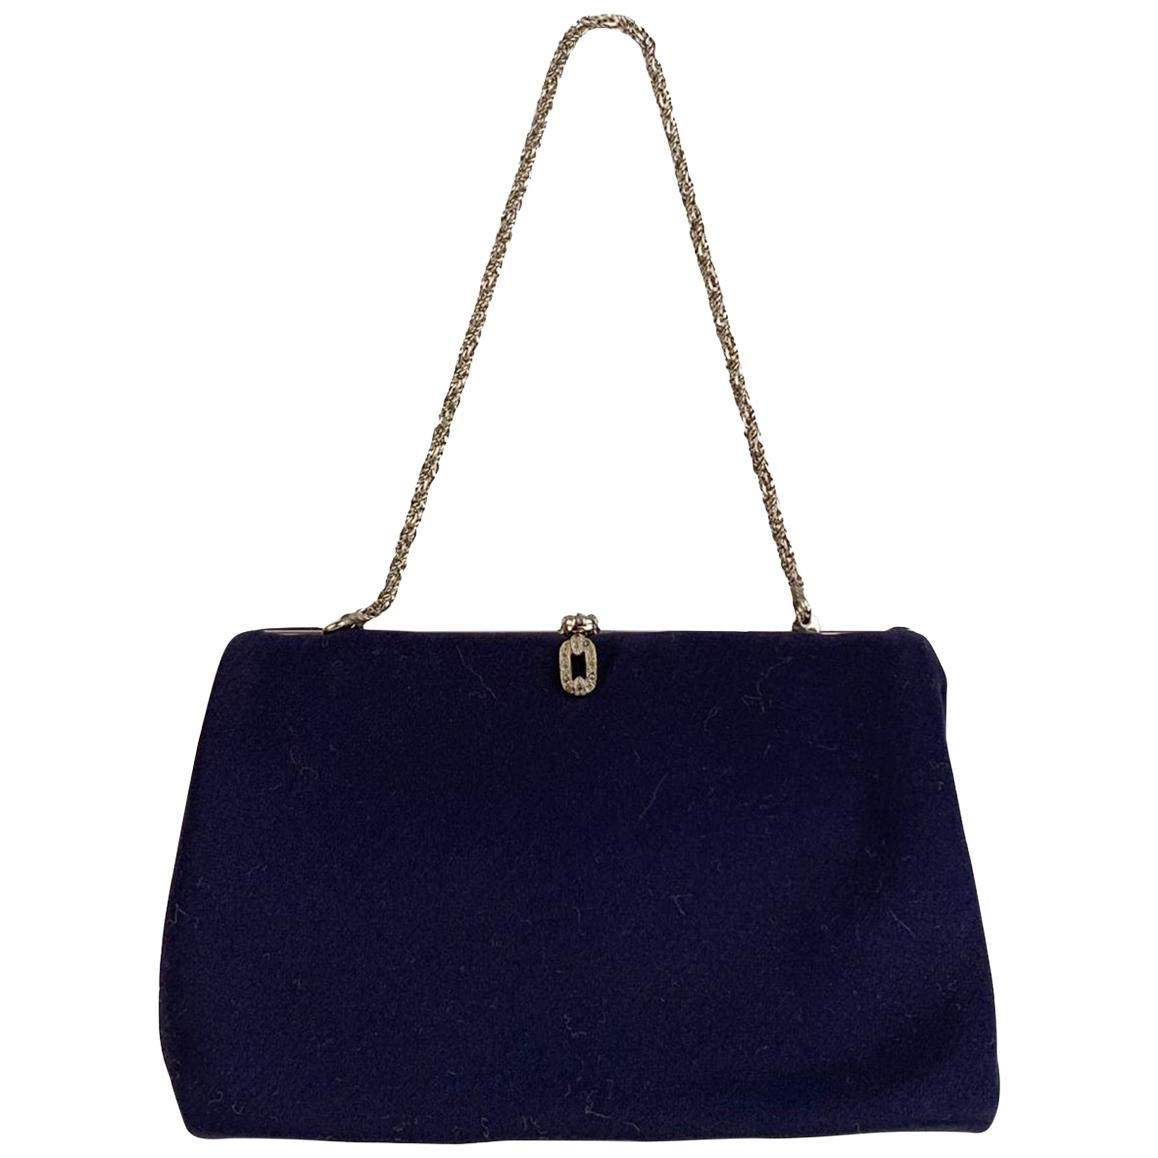 Fendi Vintage Navy Blue Satin Evening Bag Handbag